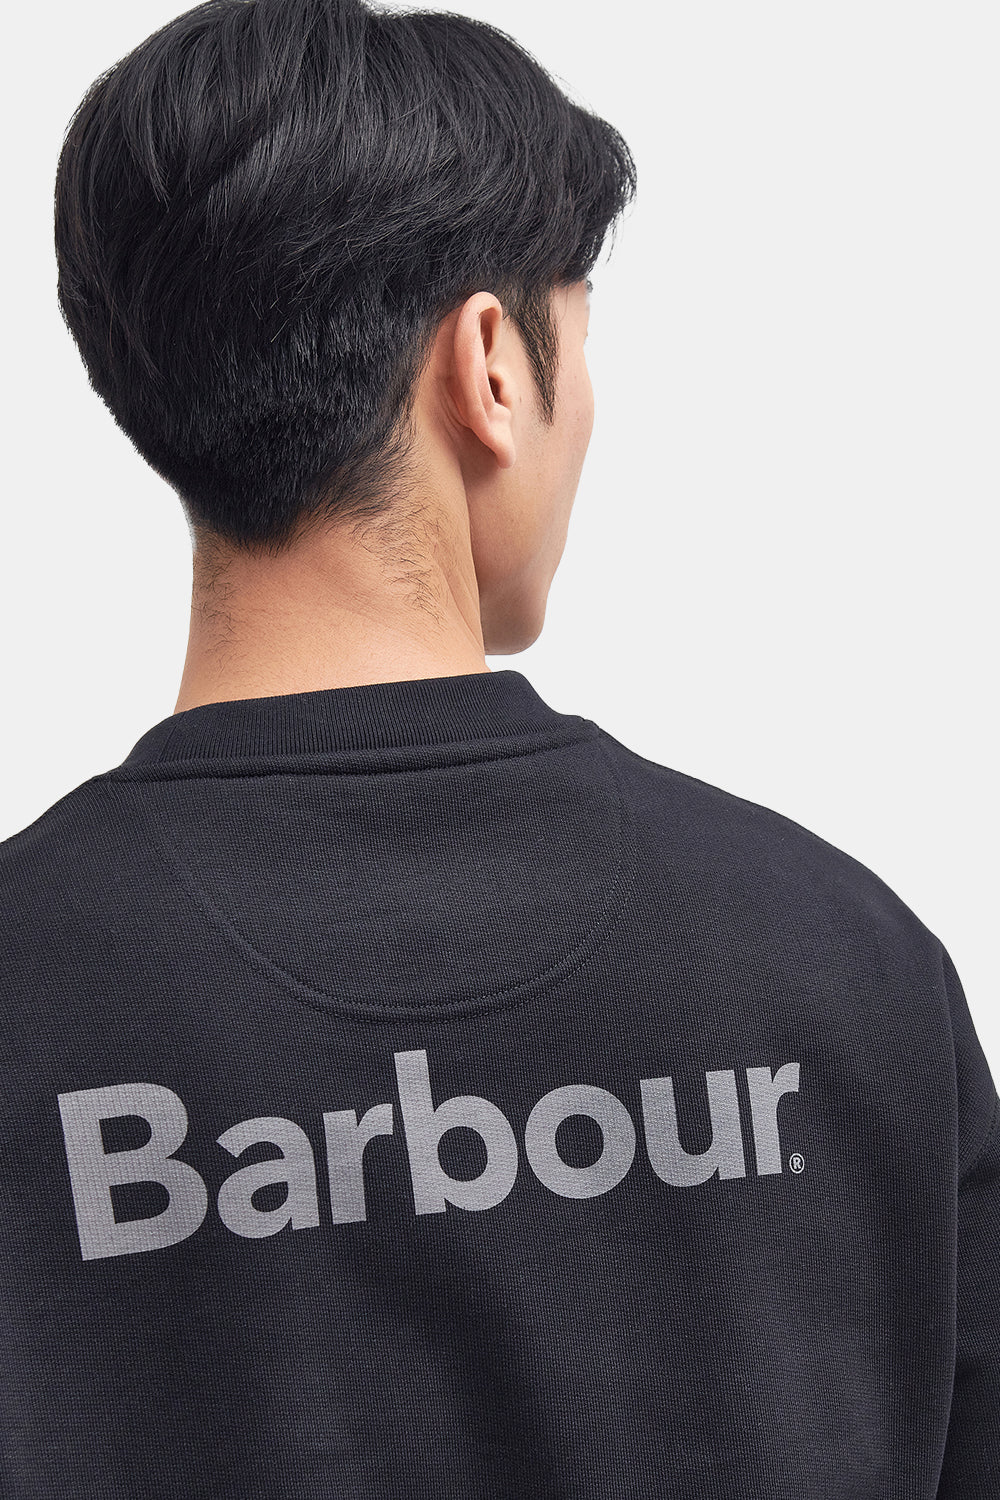 Barbour Nicholas Crew Sweatshirt (Black) Close Up